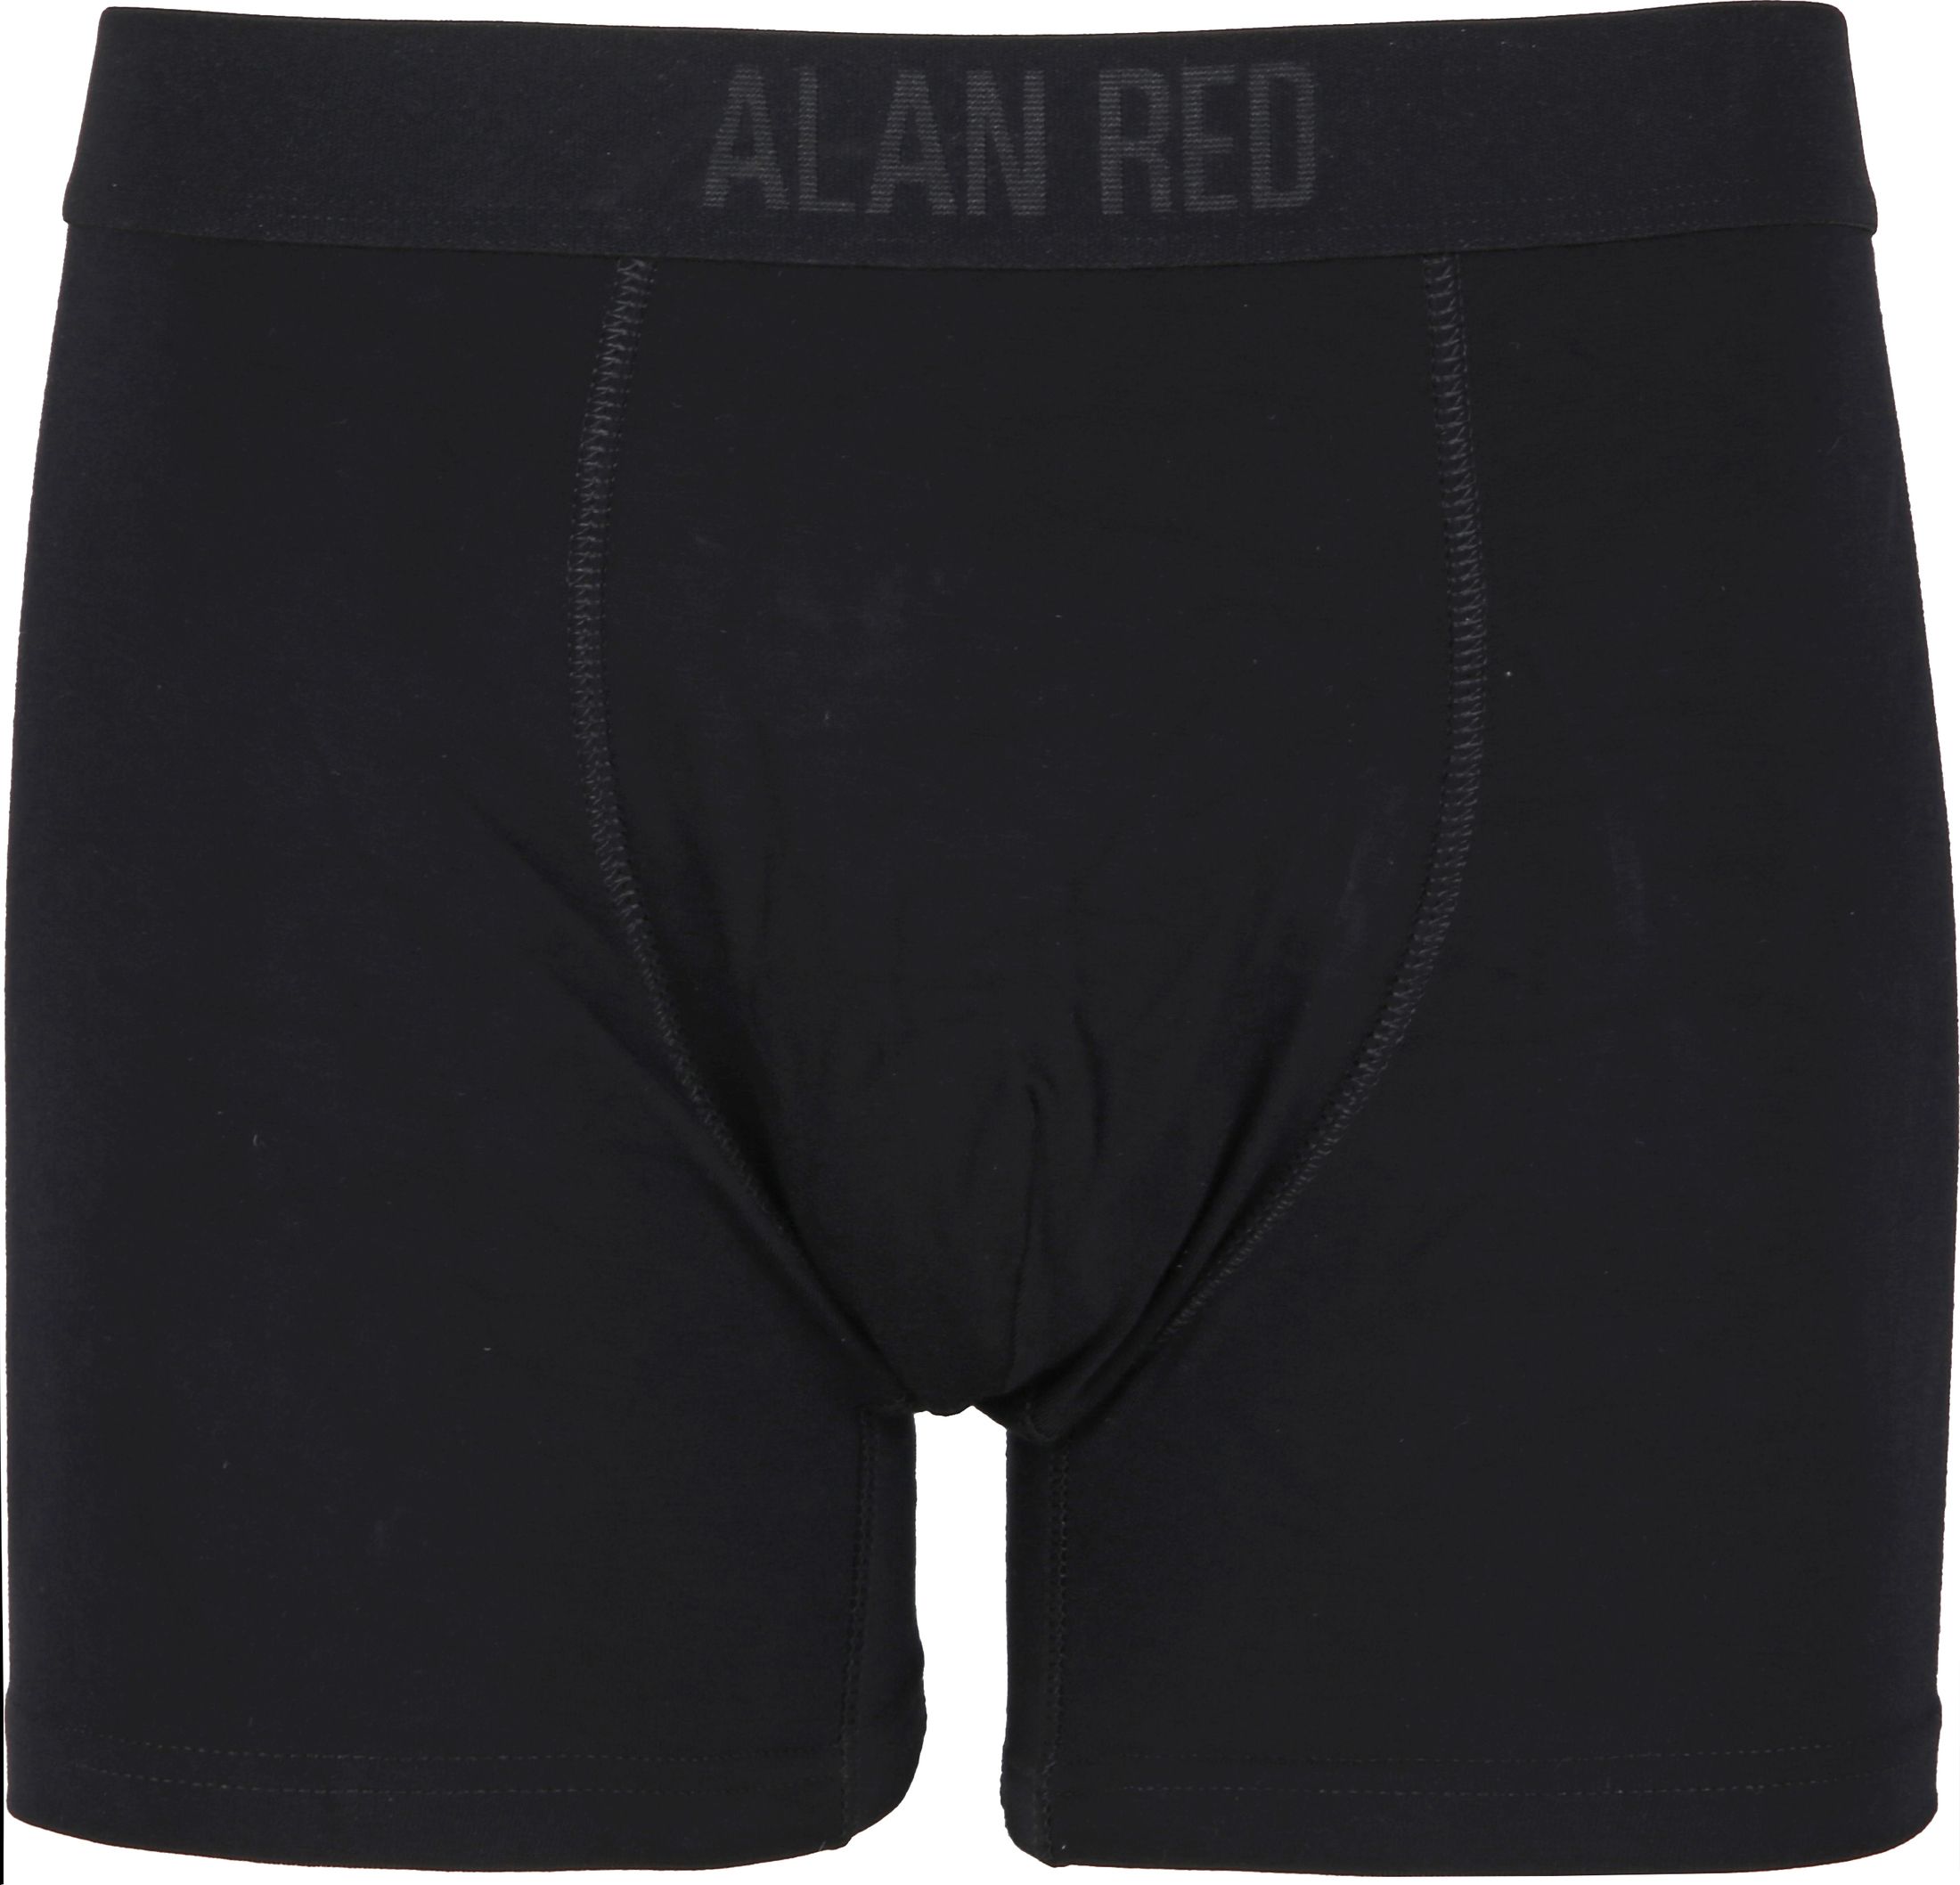 Alan Red Boxer Shorts Bamboo Black size L